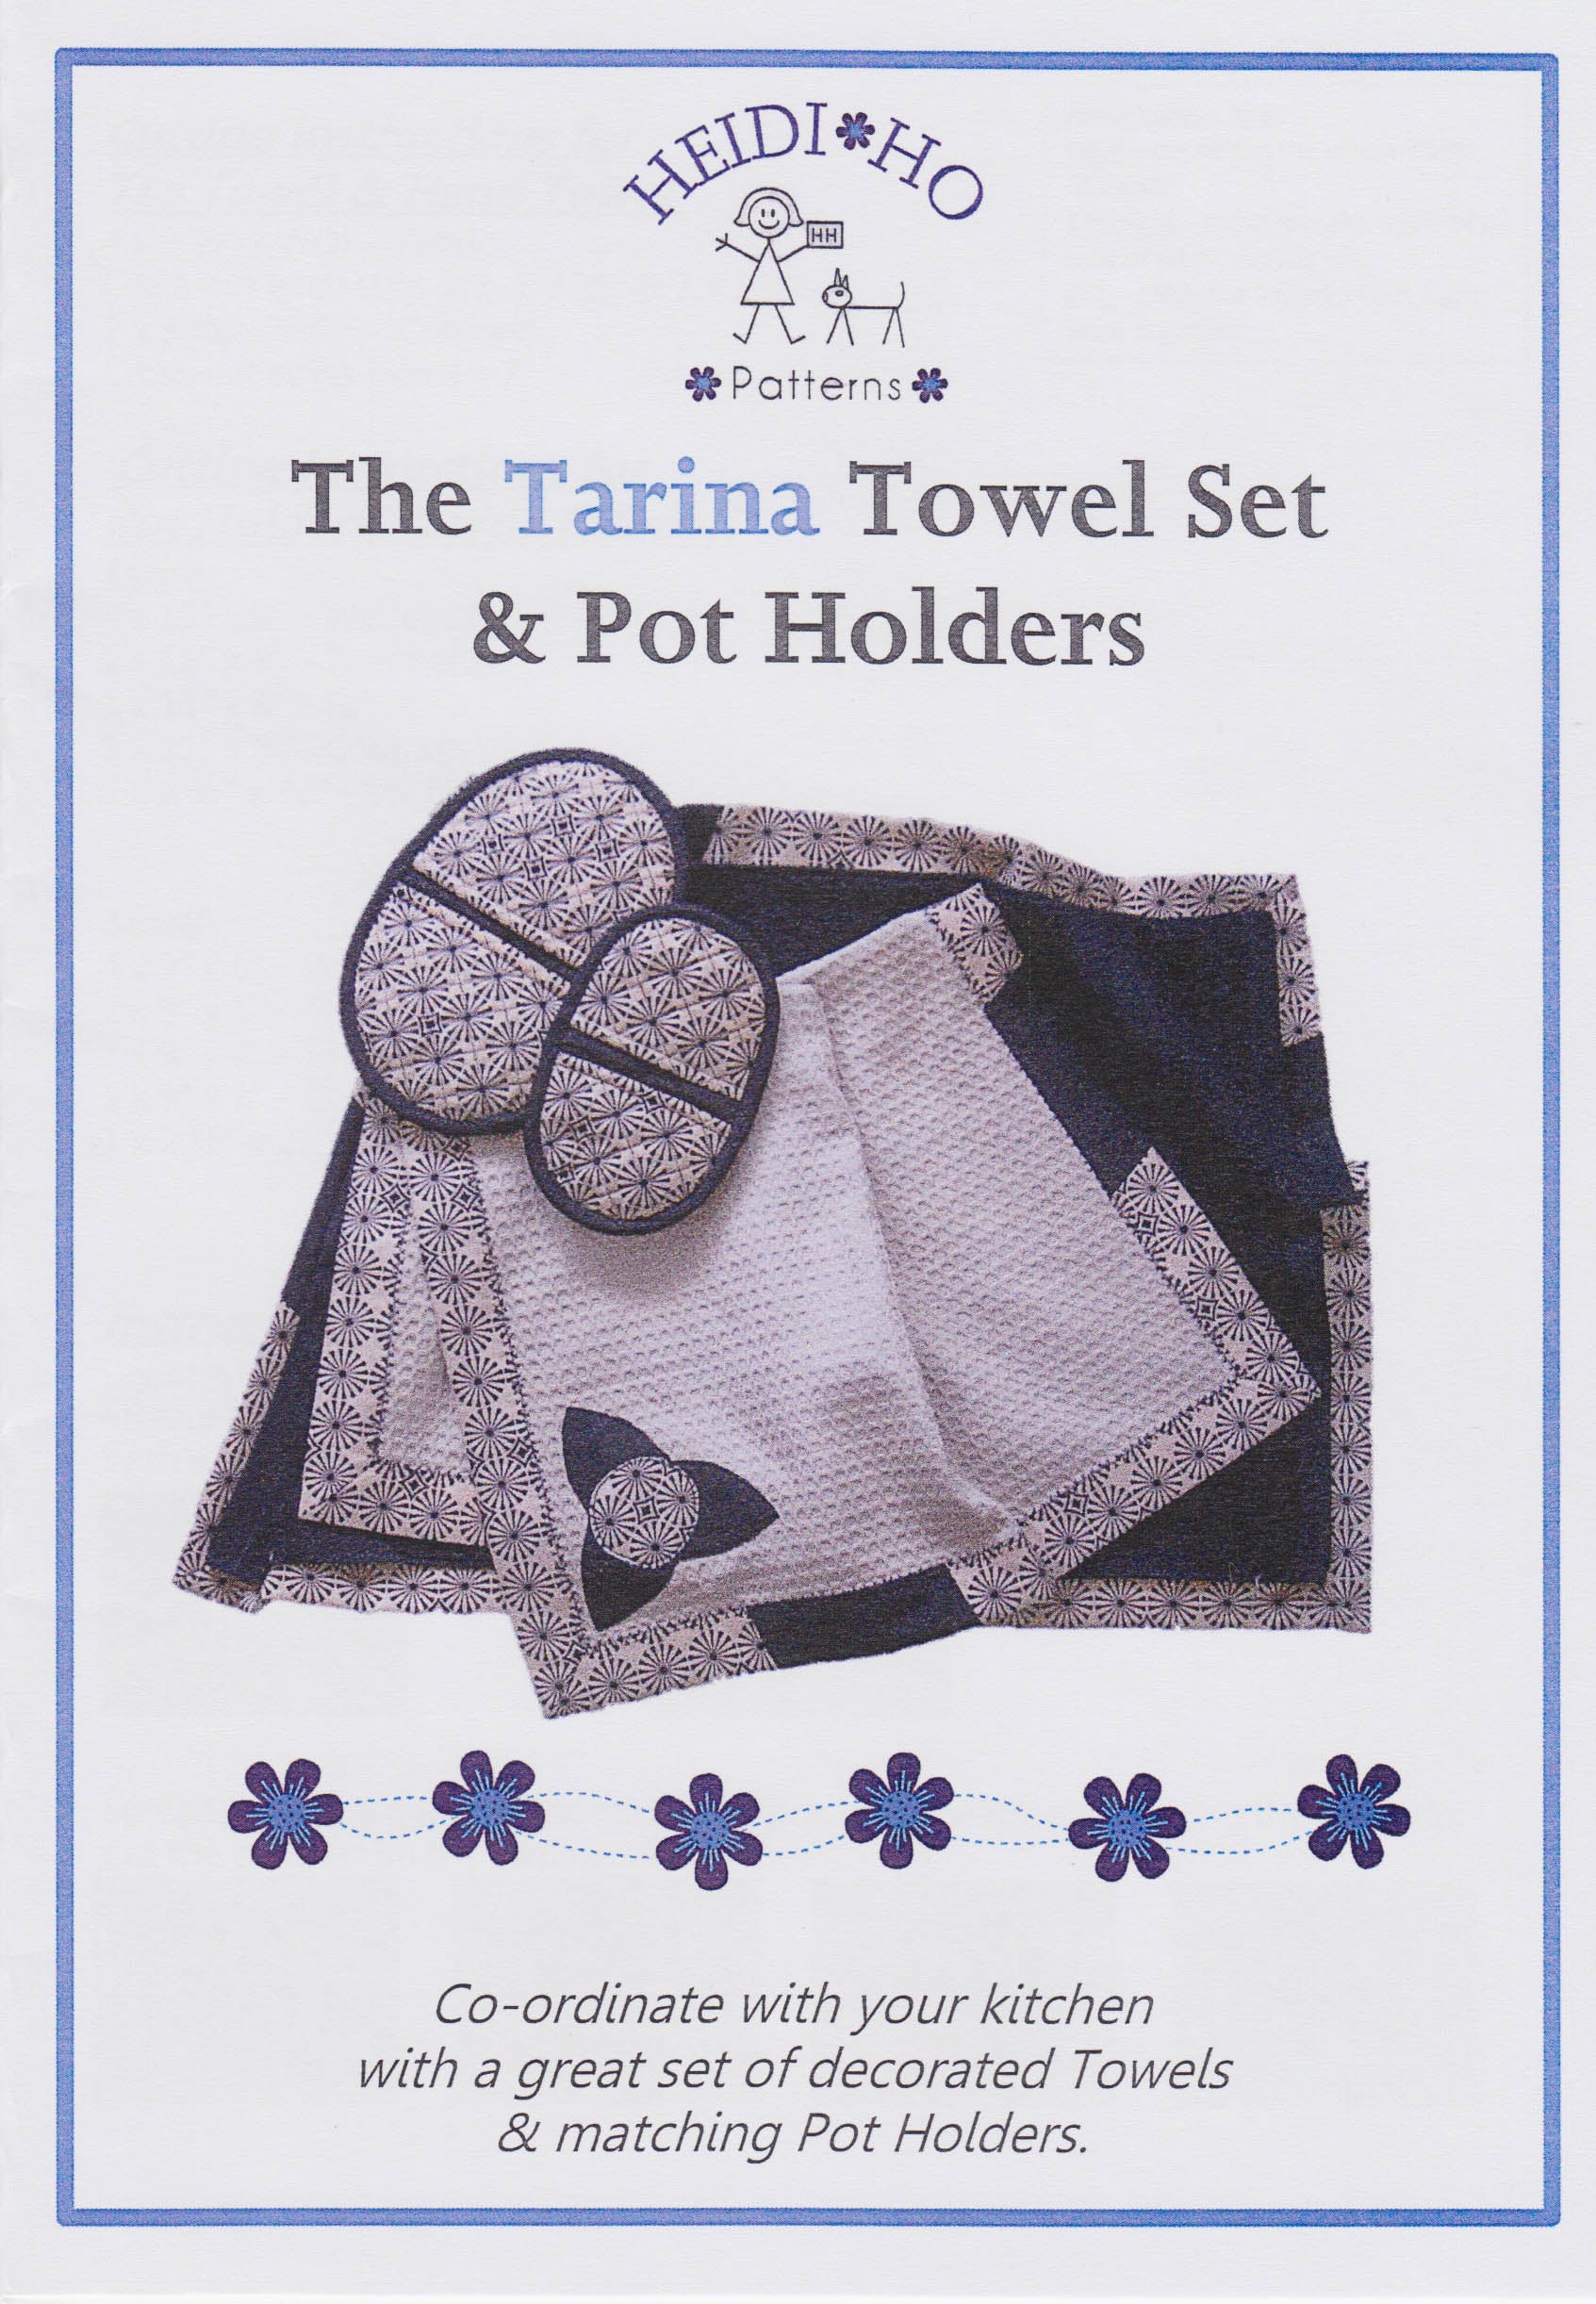 The Tarina Towel Set & Pot Holders - Pattern - by Australian Designer Heidi Ho Patterns